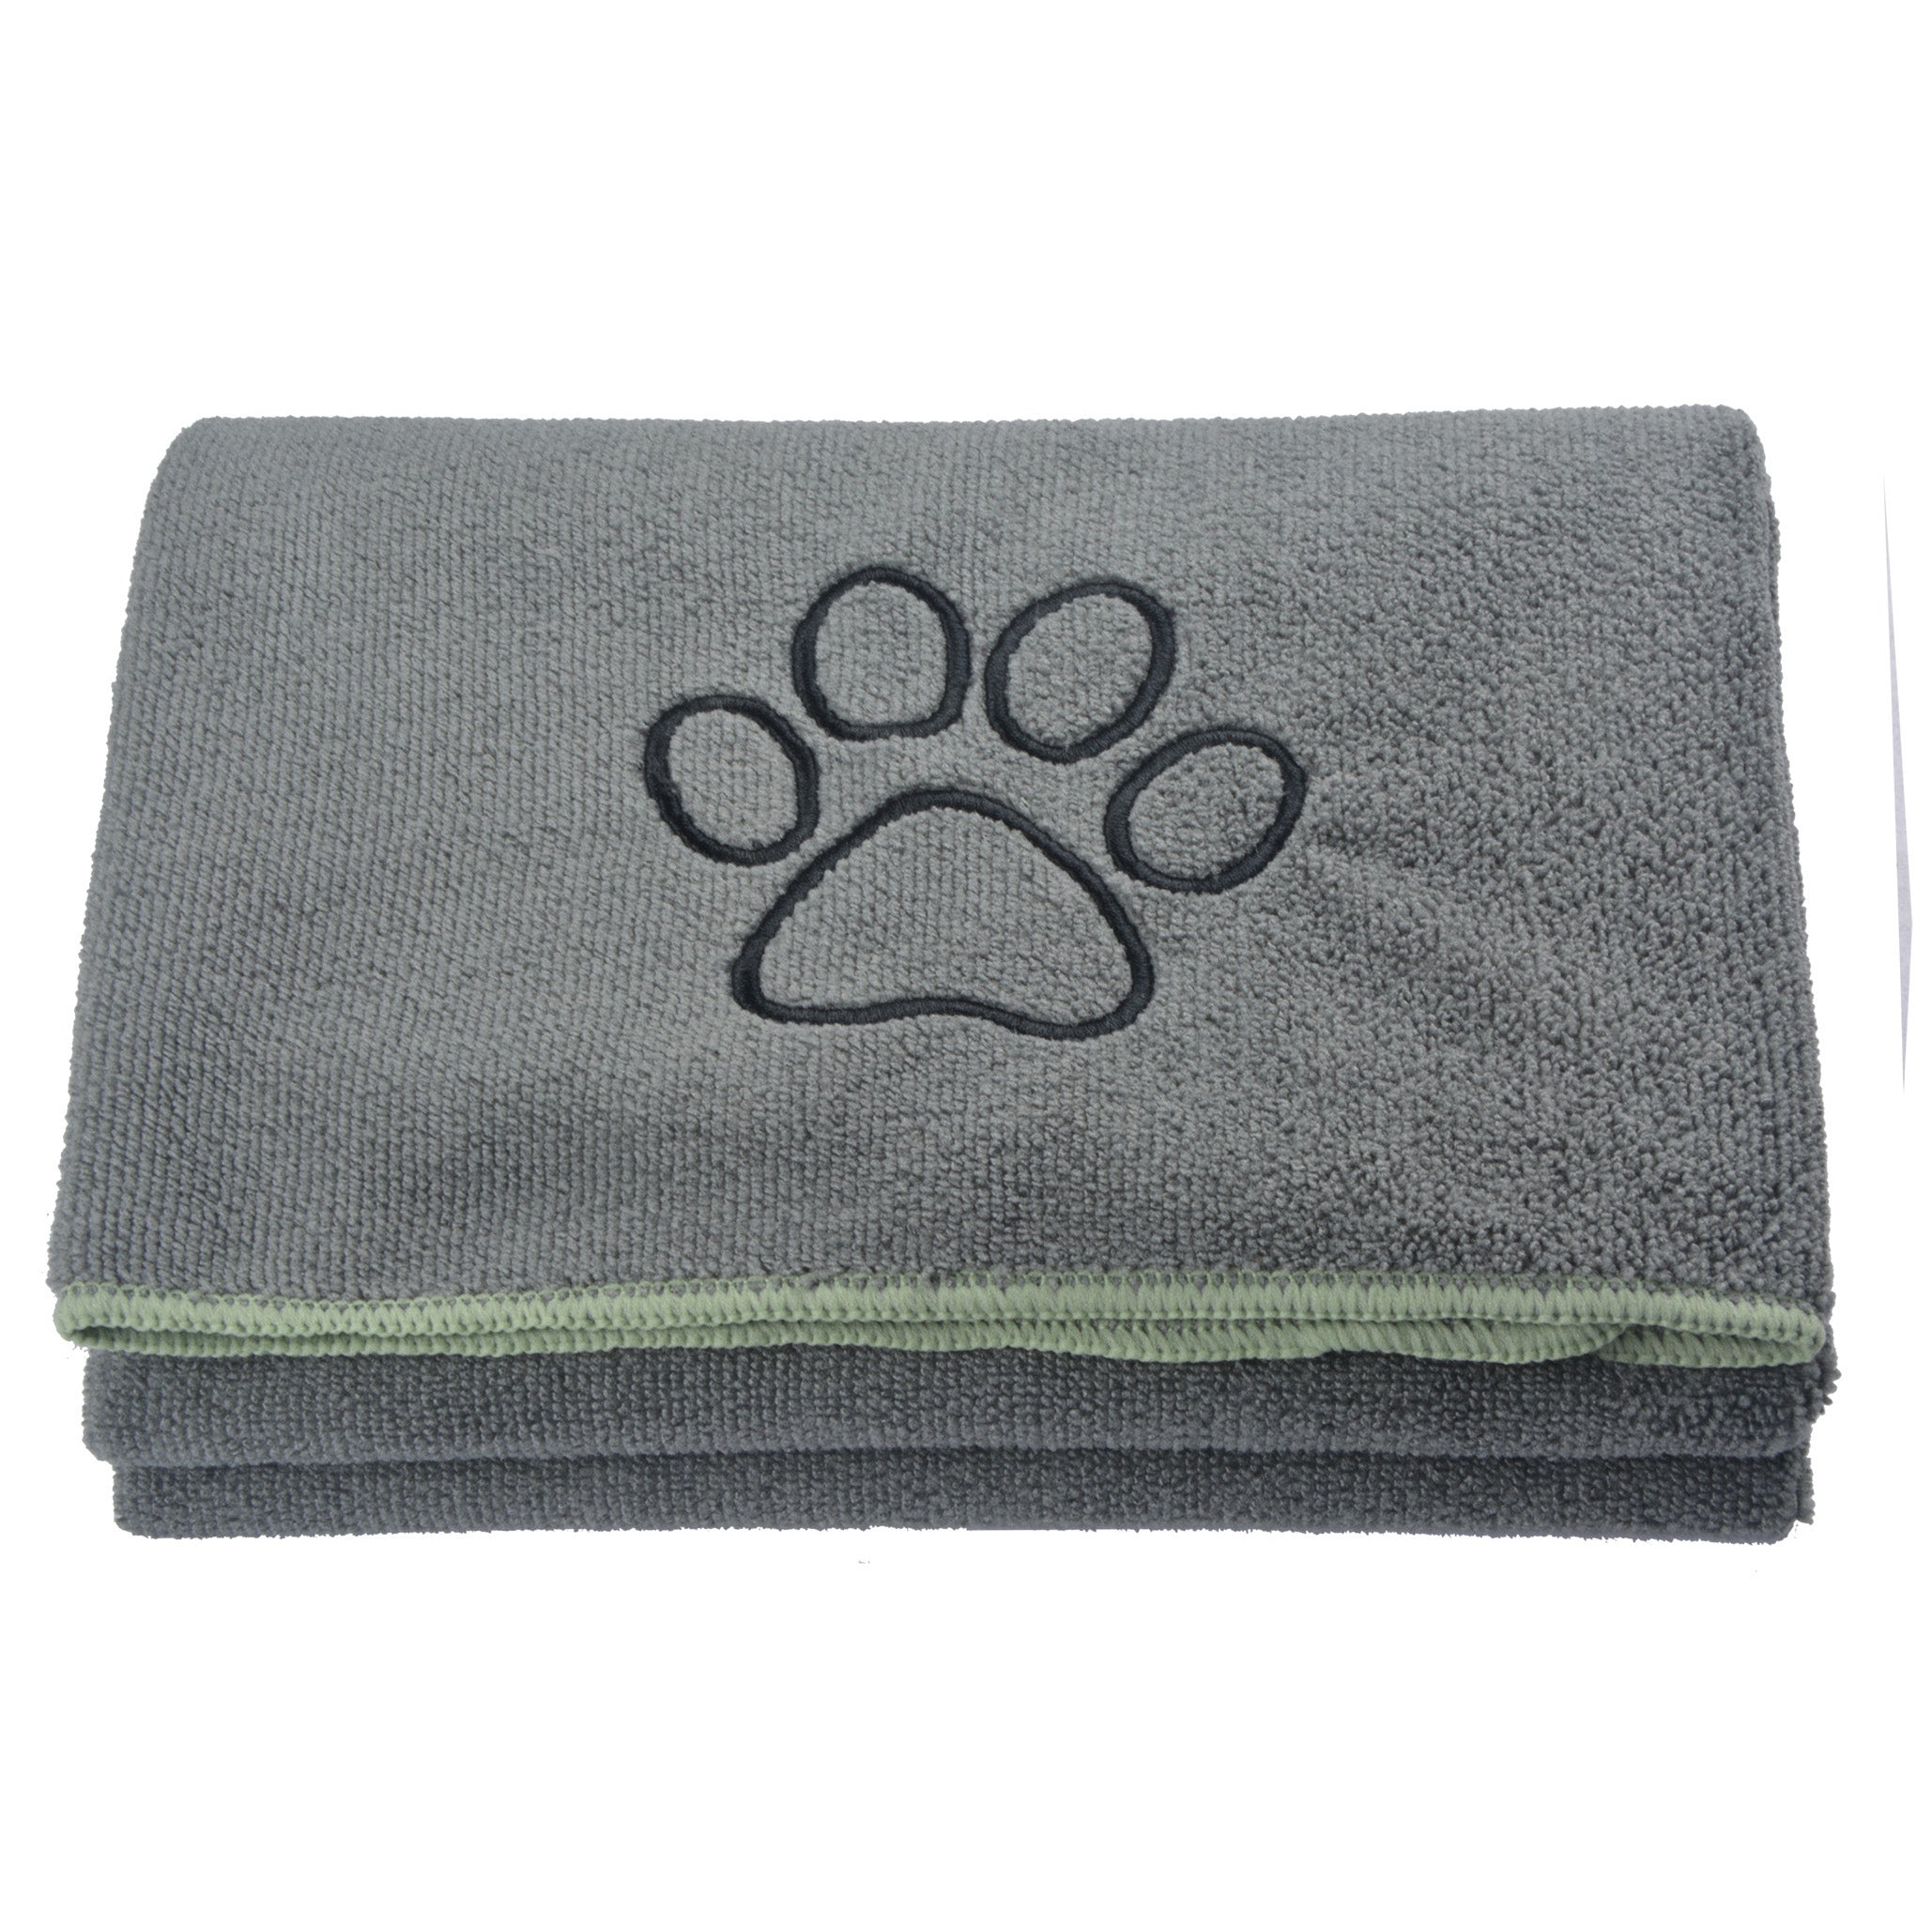 Ultra Absorbent Microfiber Pet Towel